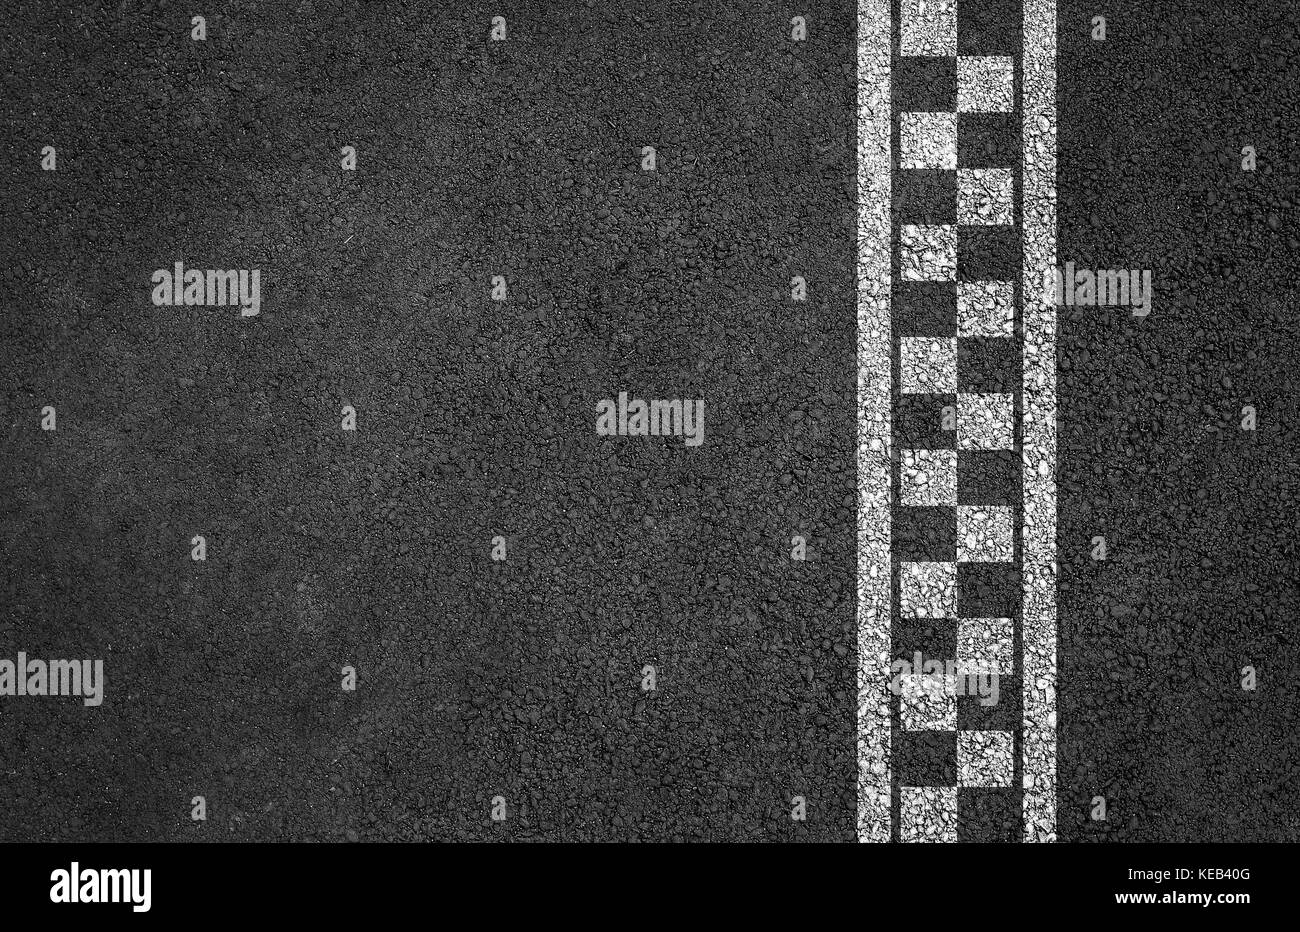 Finishing line Black and White Stock Photos & Images - Alamy